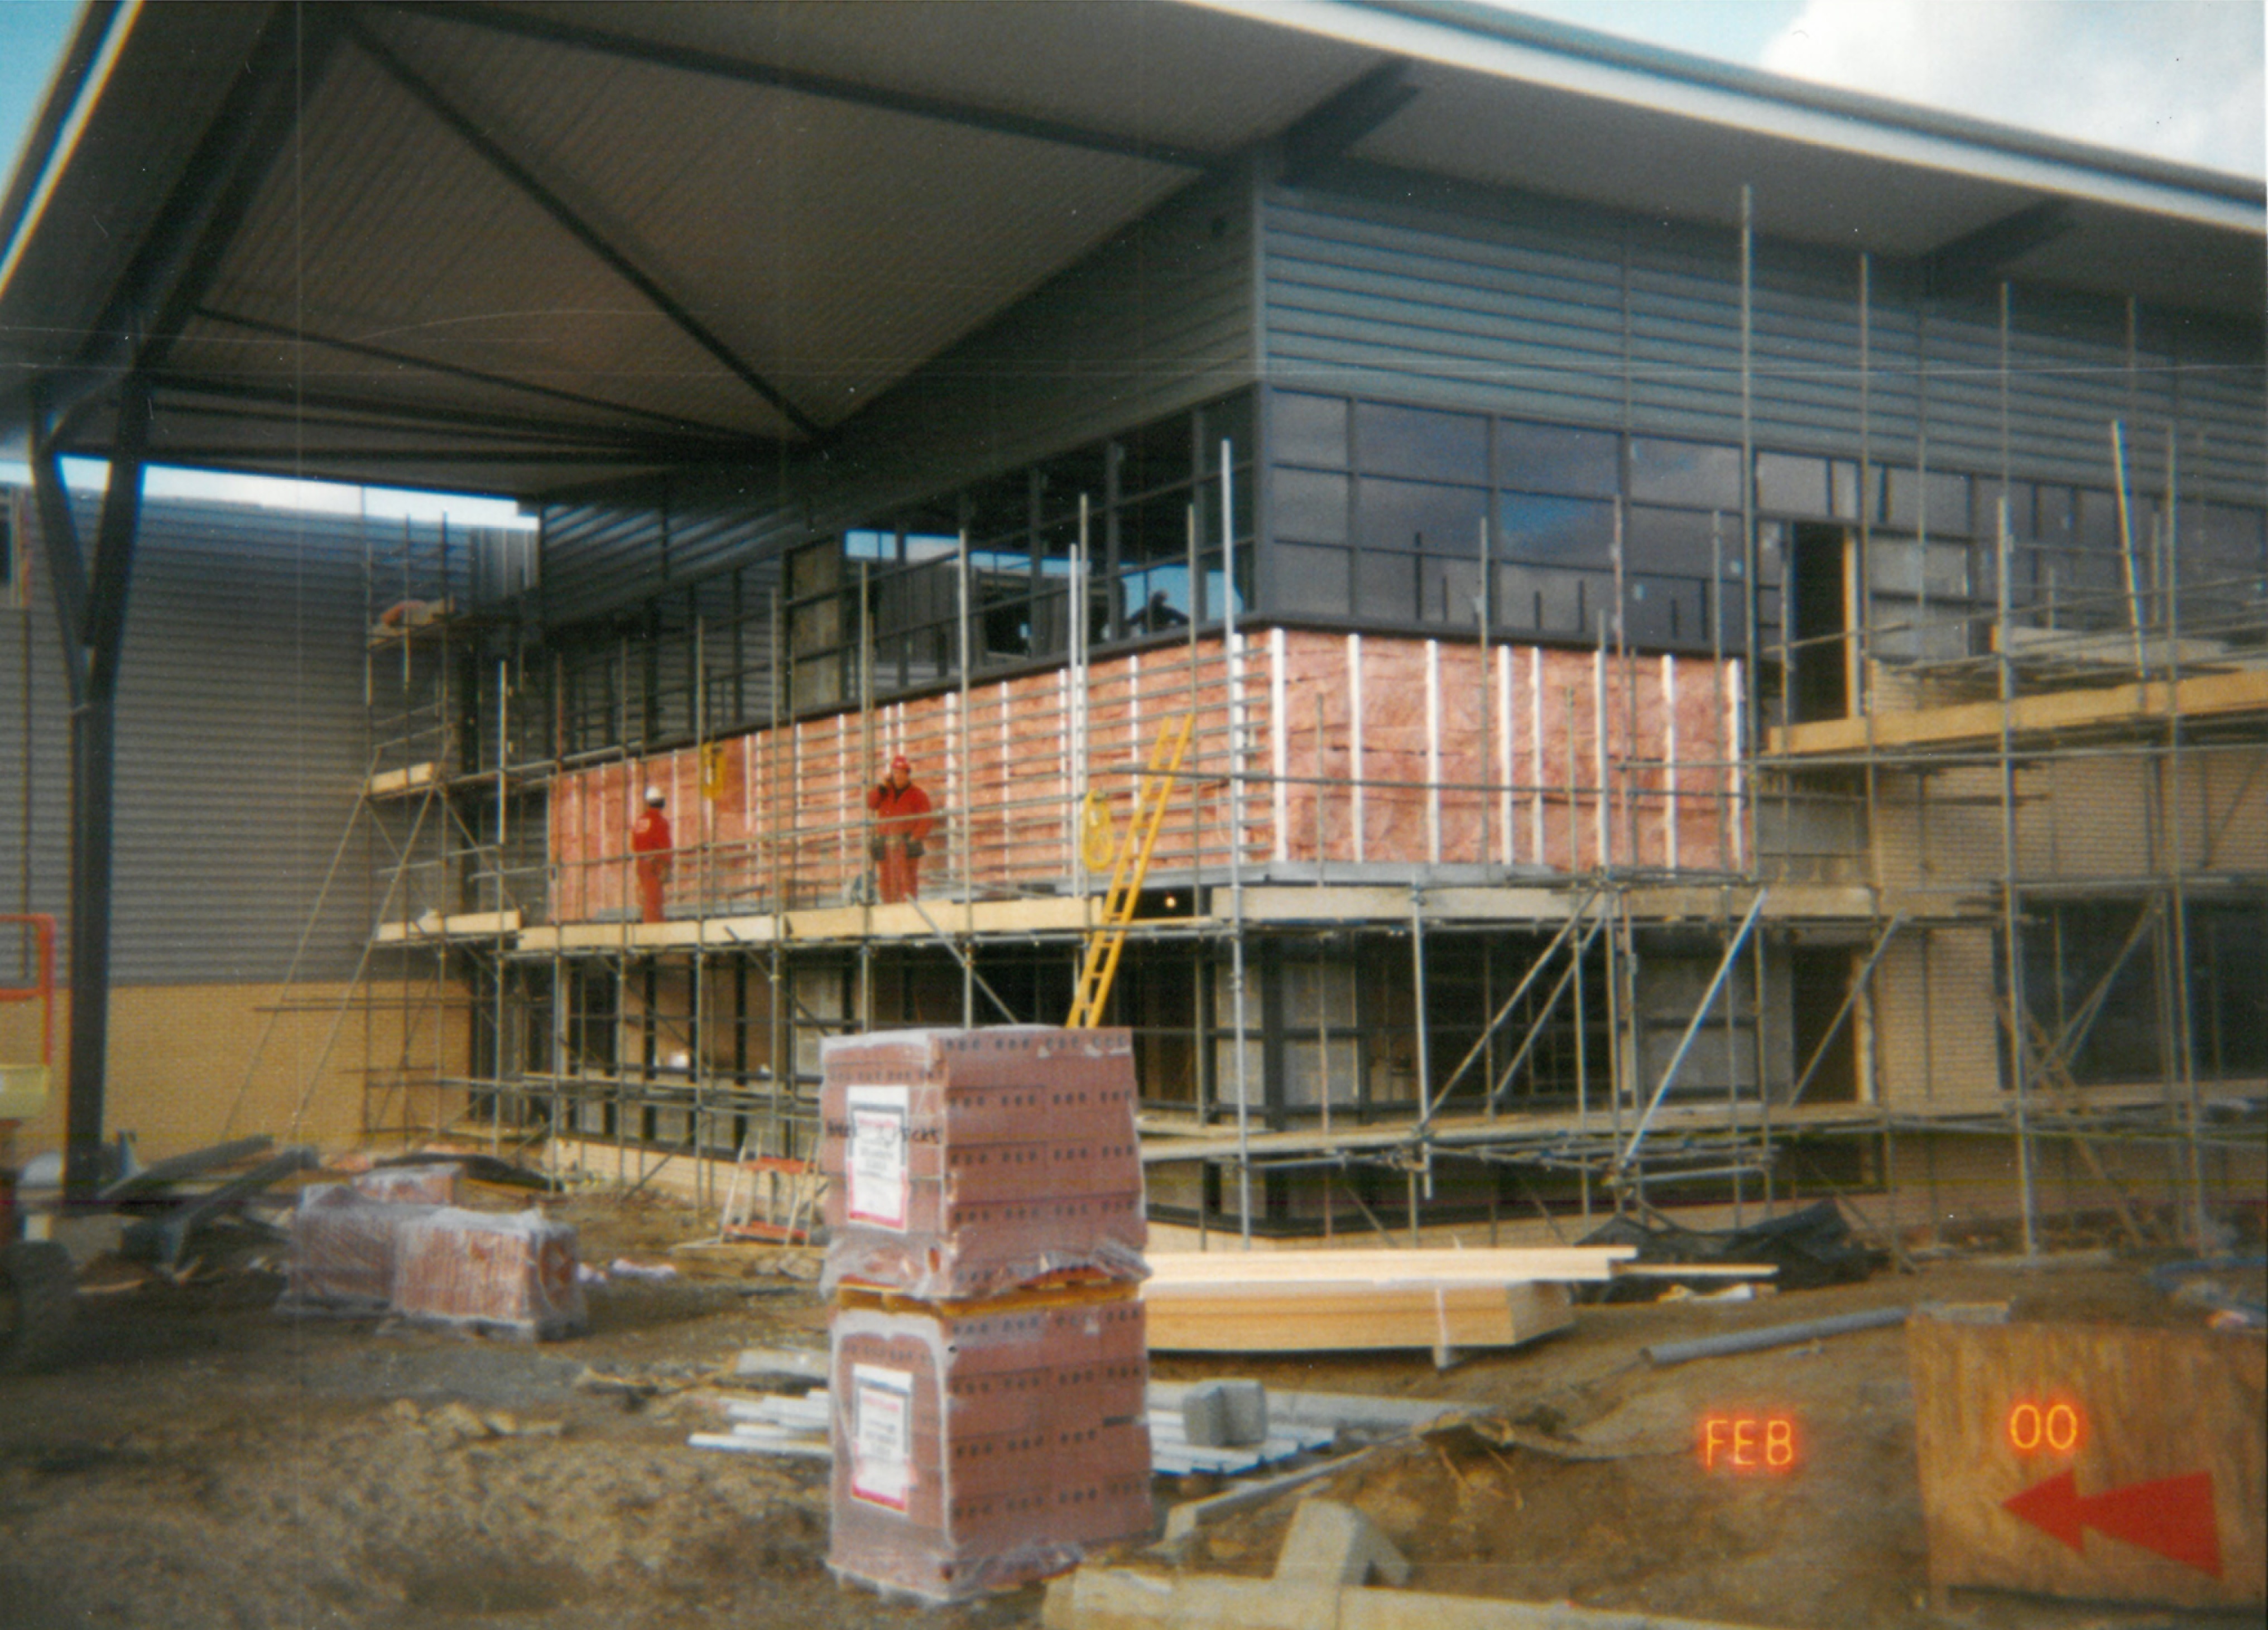 Severalls Lane during building